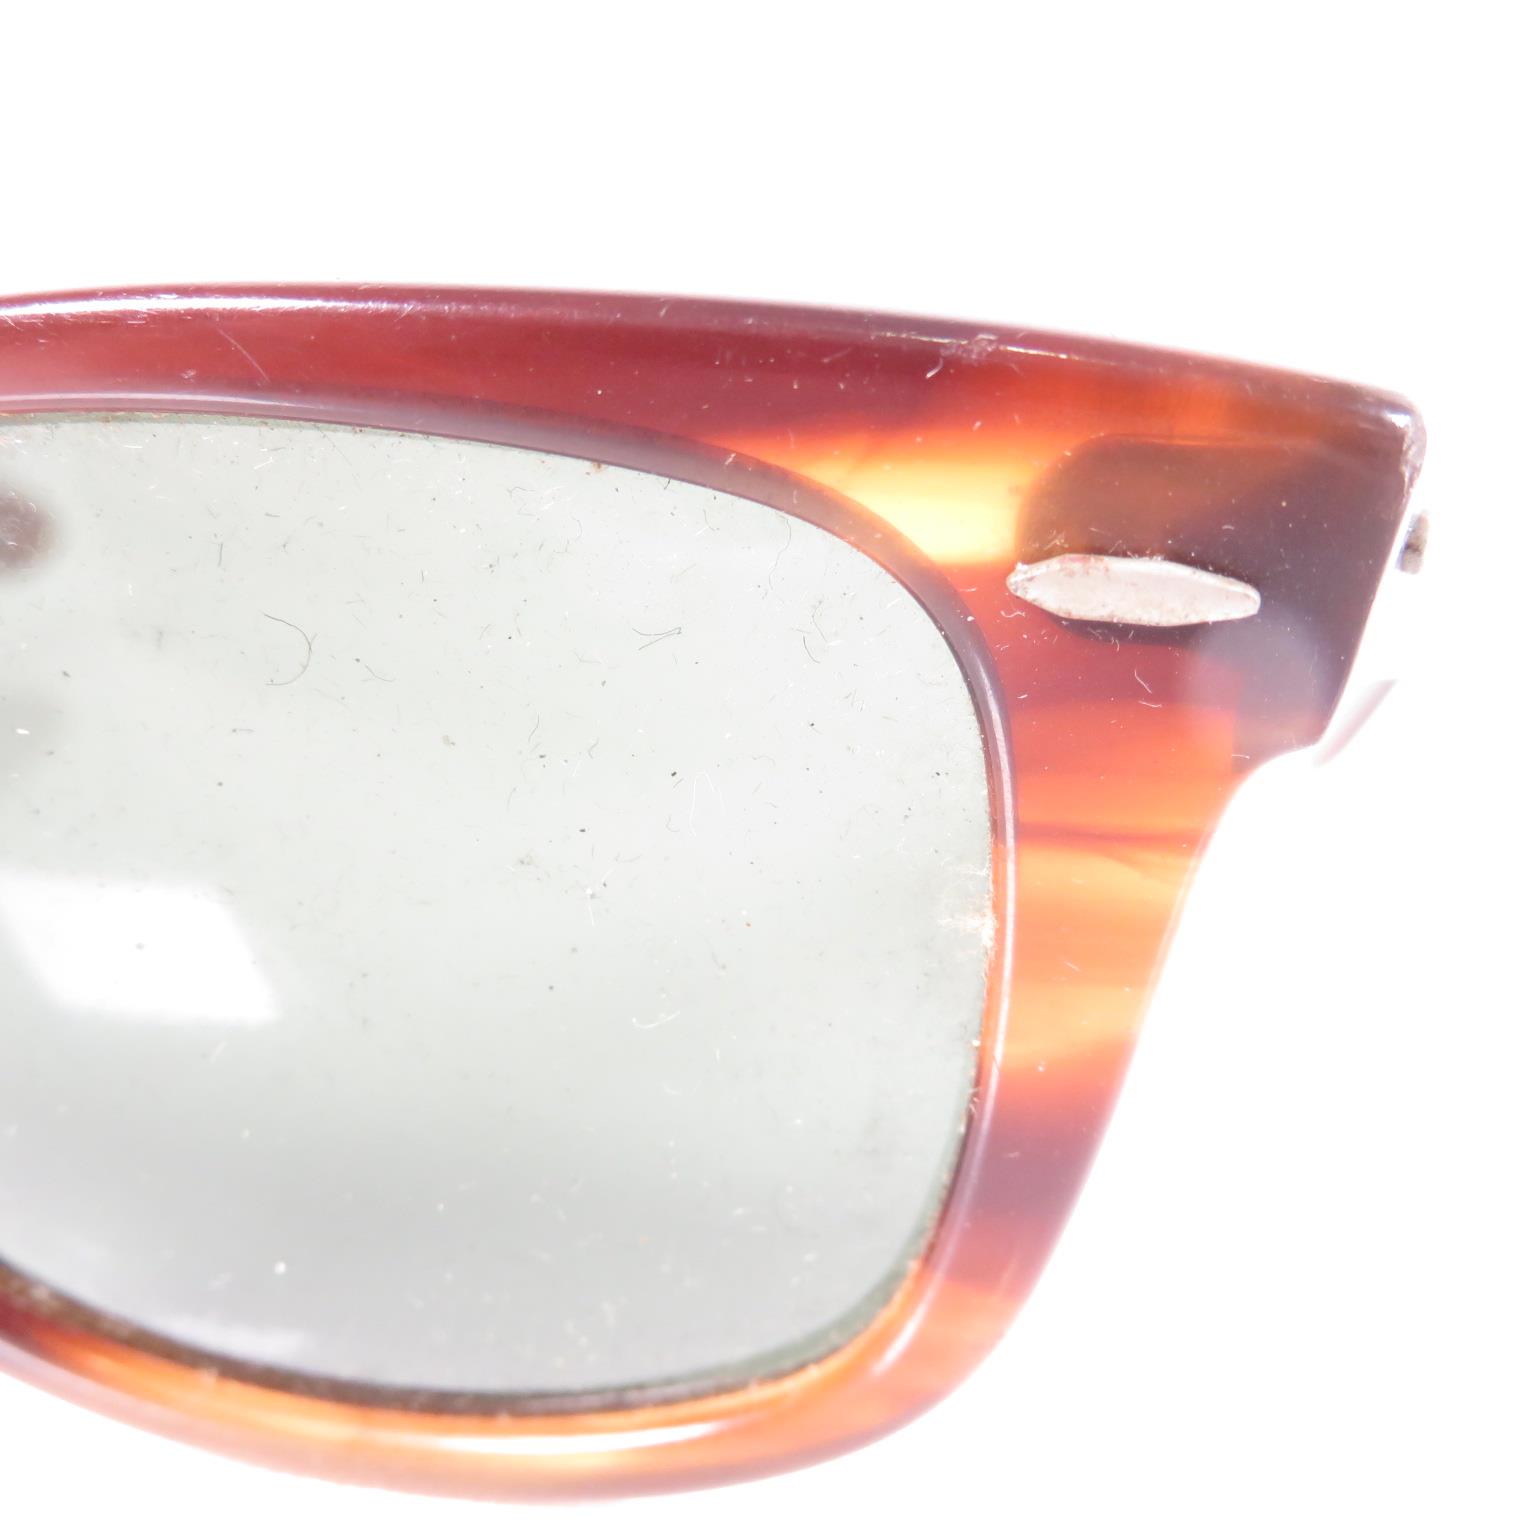 4x pairs Ray Ban sunglasses - - Image 16 of 22